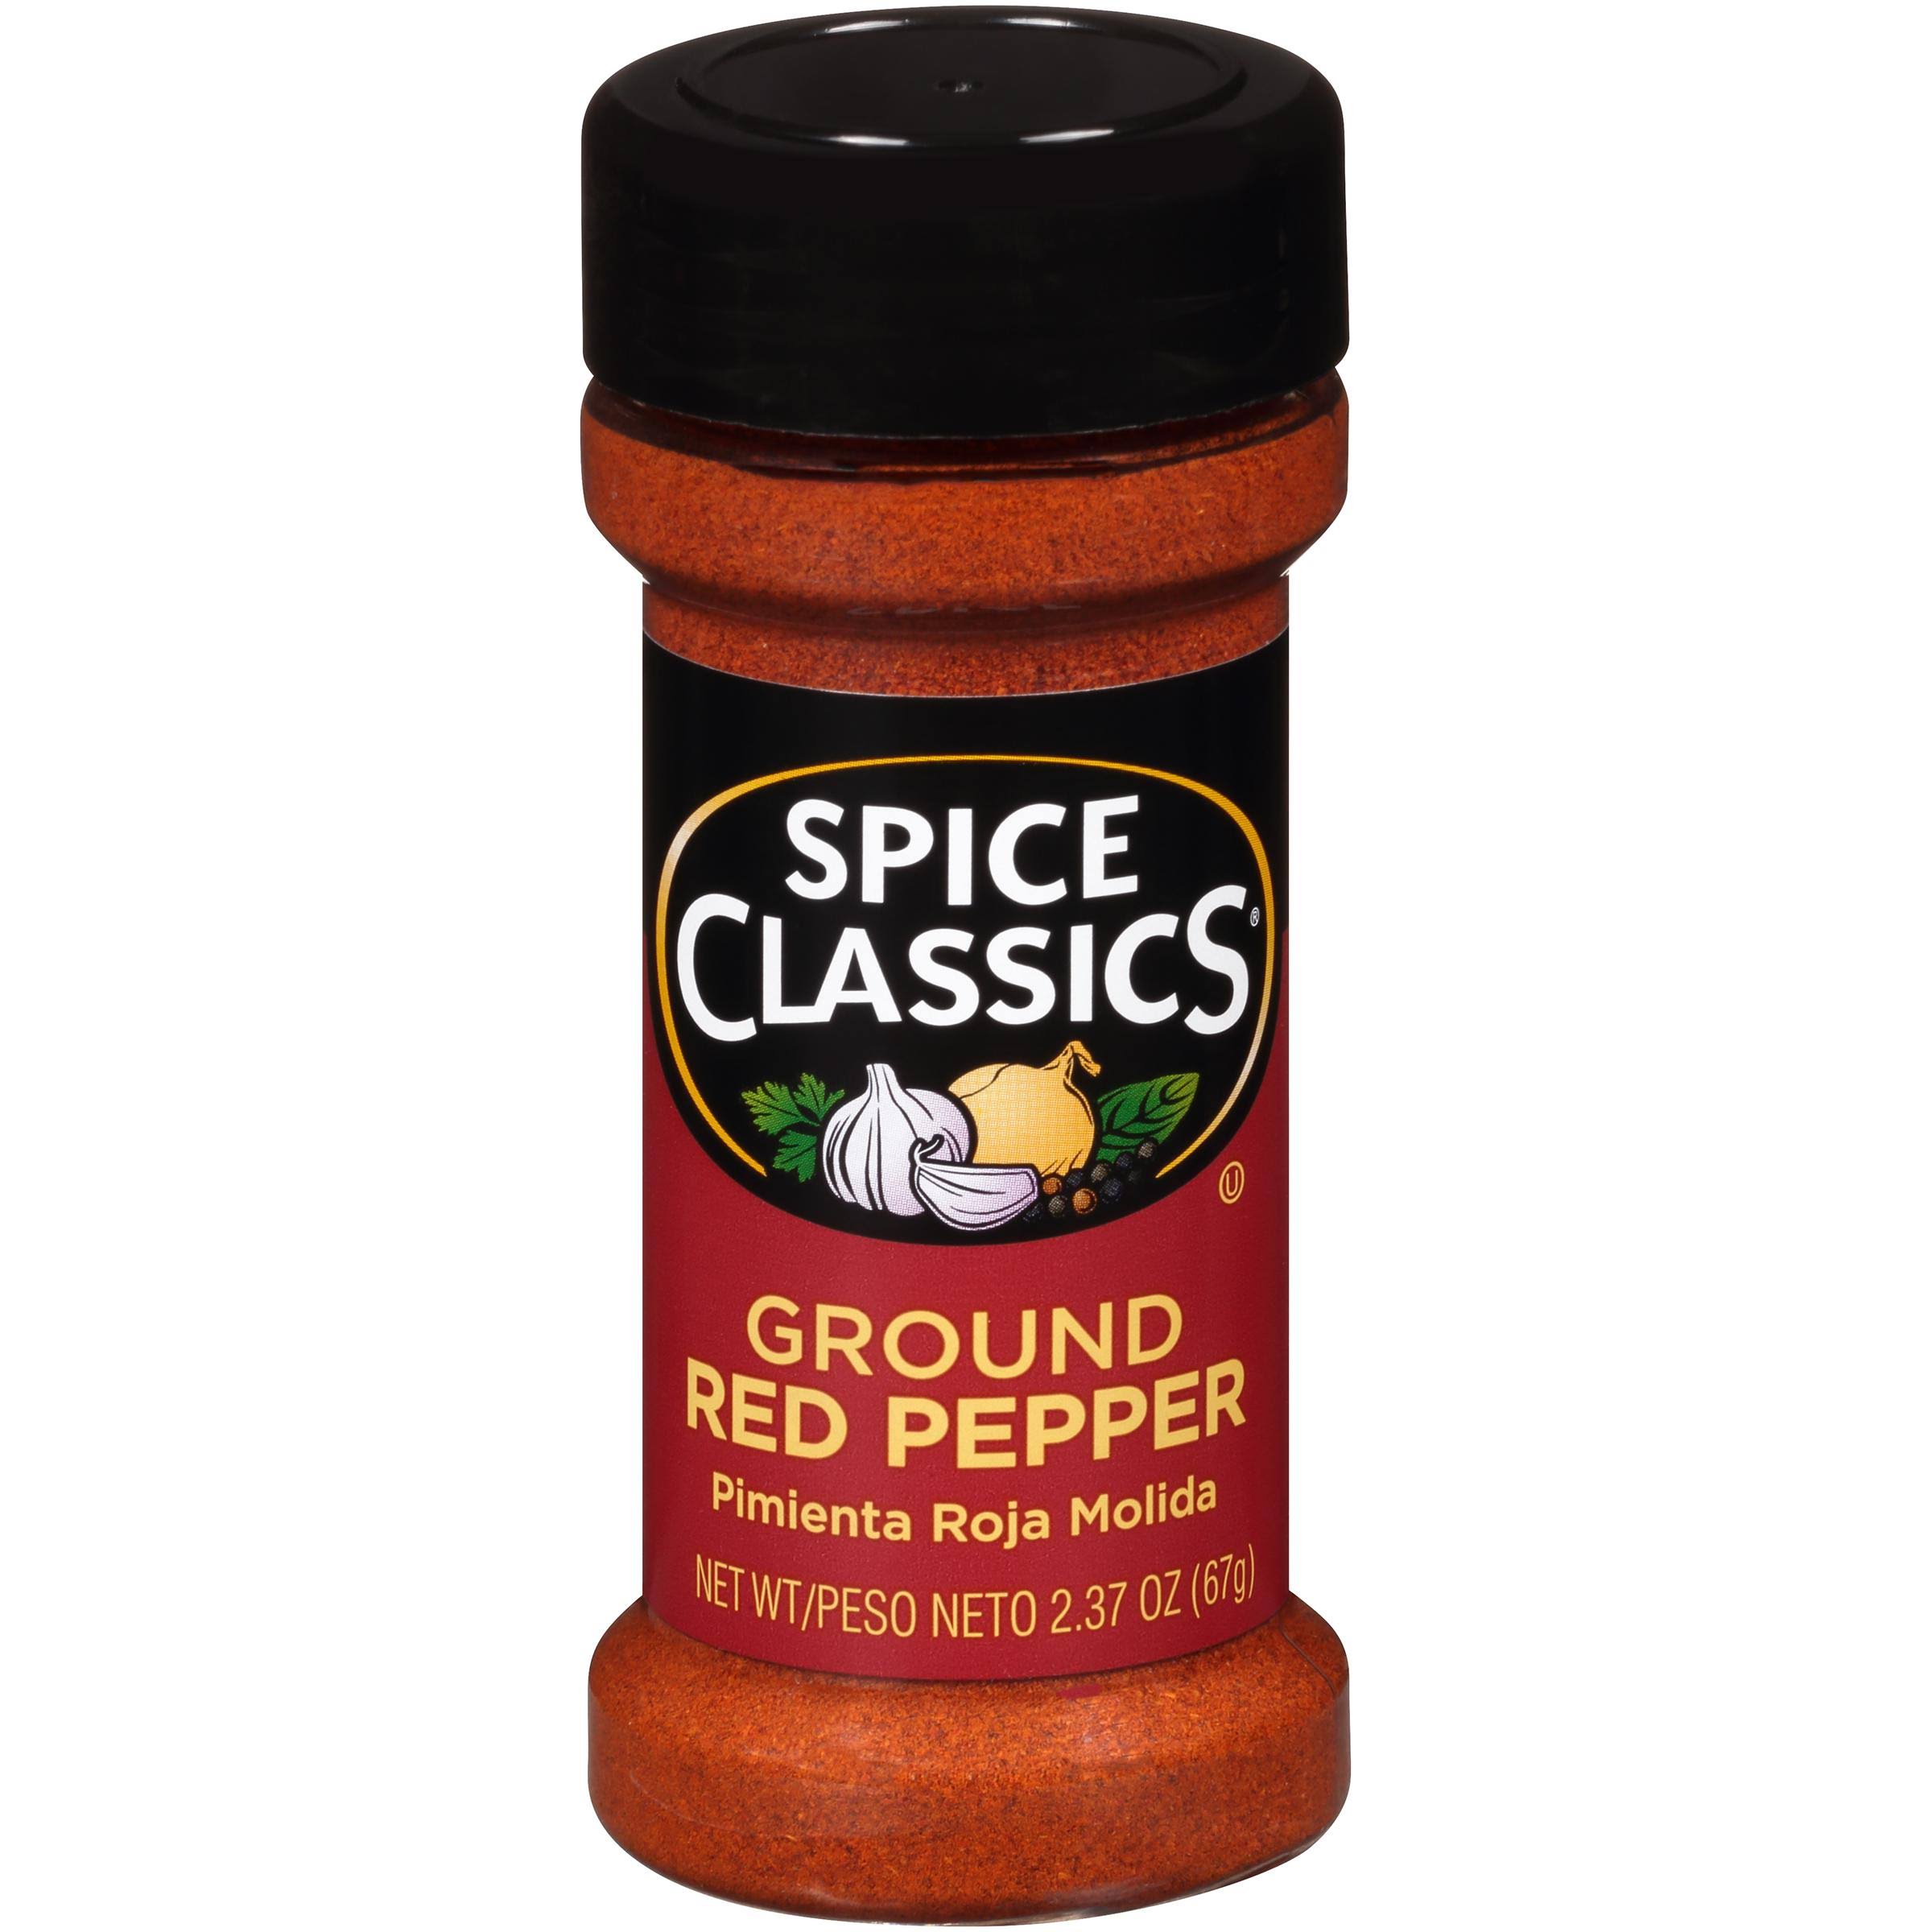 Spice Classics Red Pepper, Ground - 2.37 oz